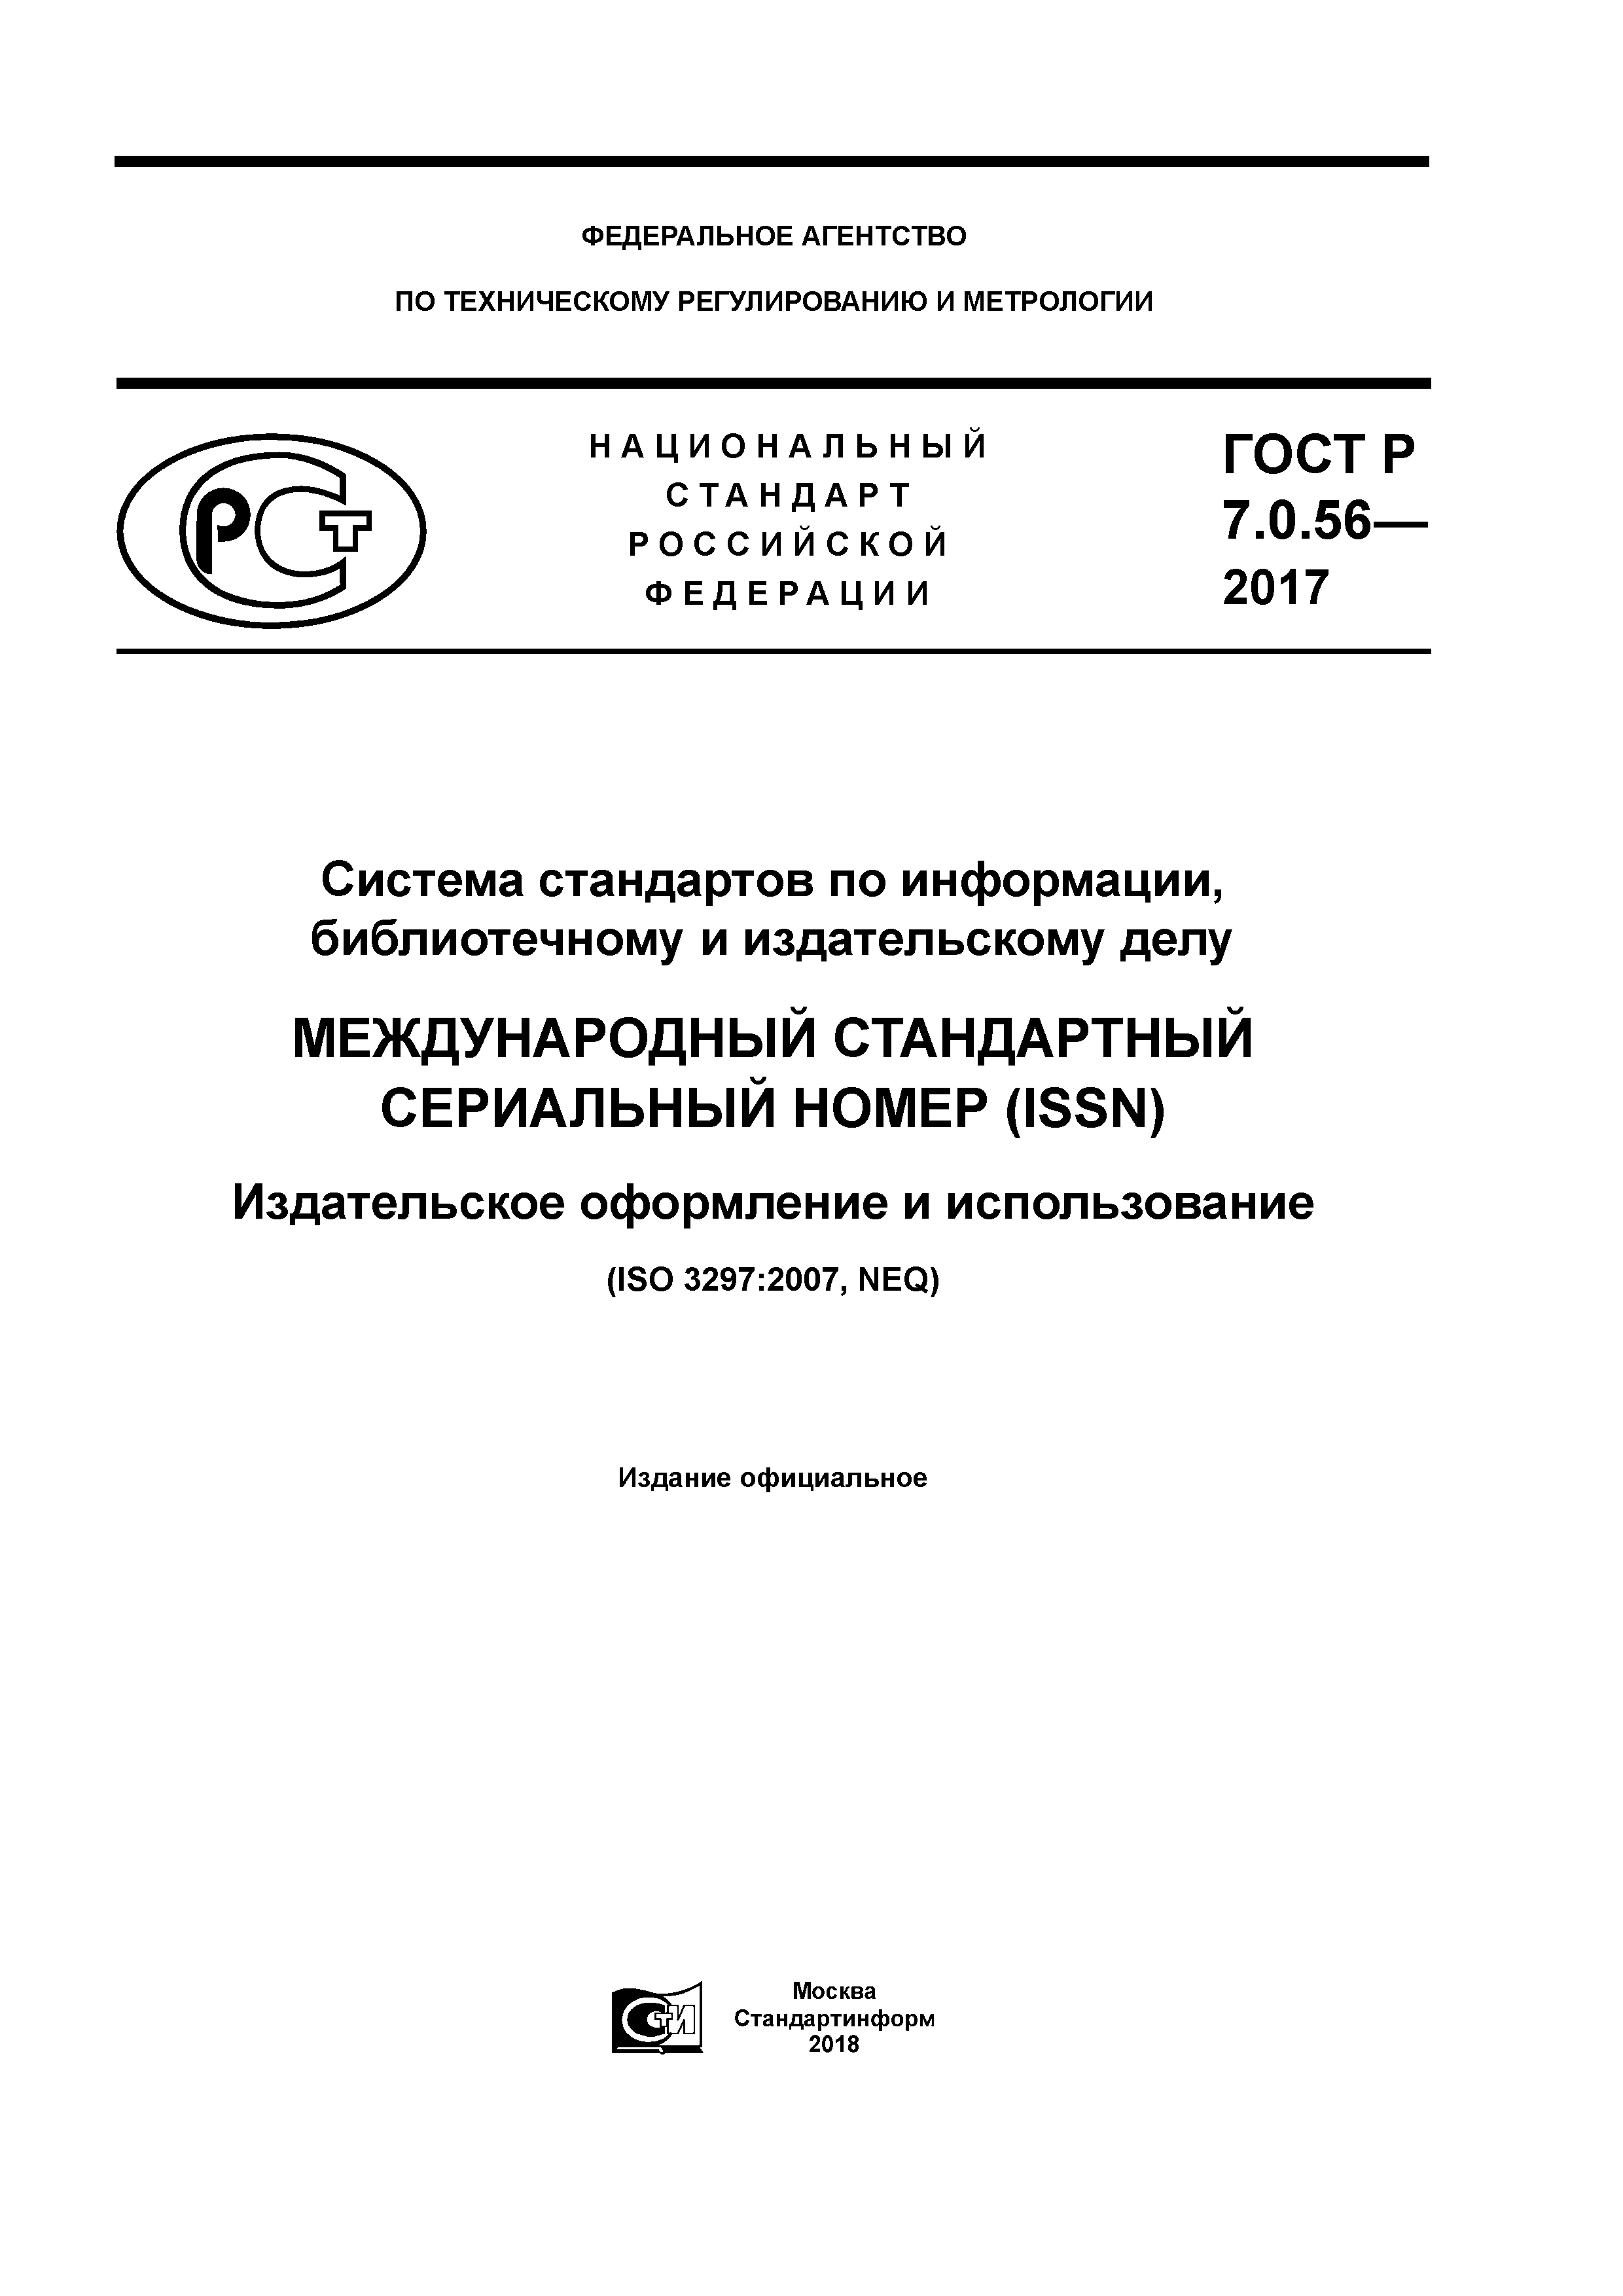 ГОСТ Р 7.0.56-2017